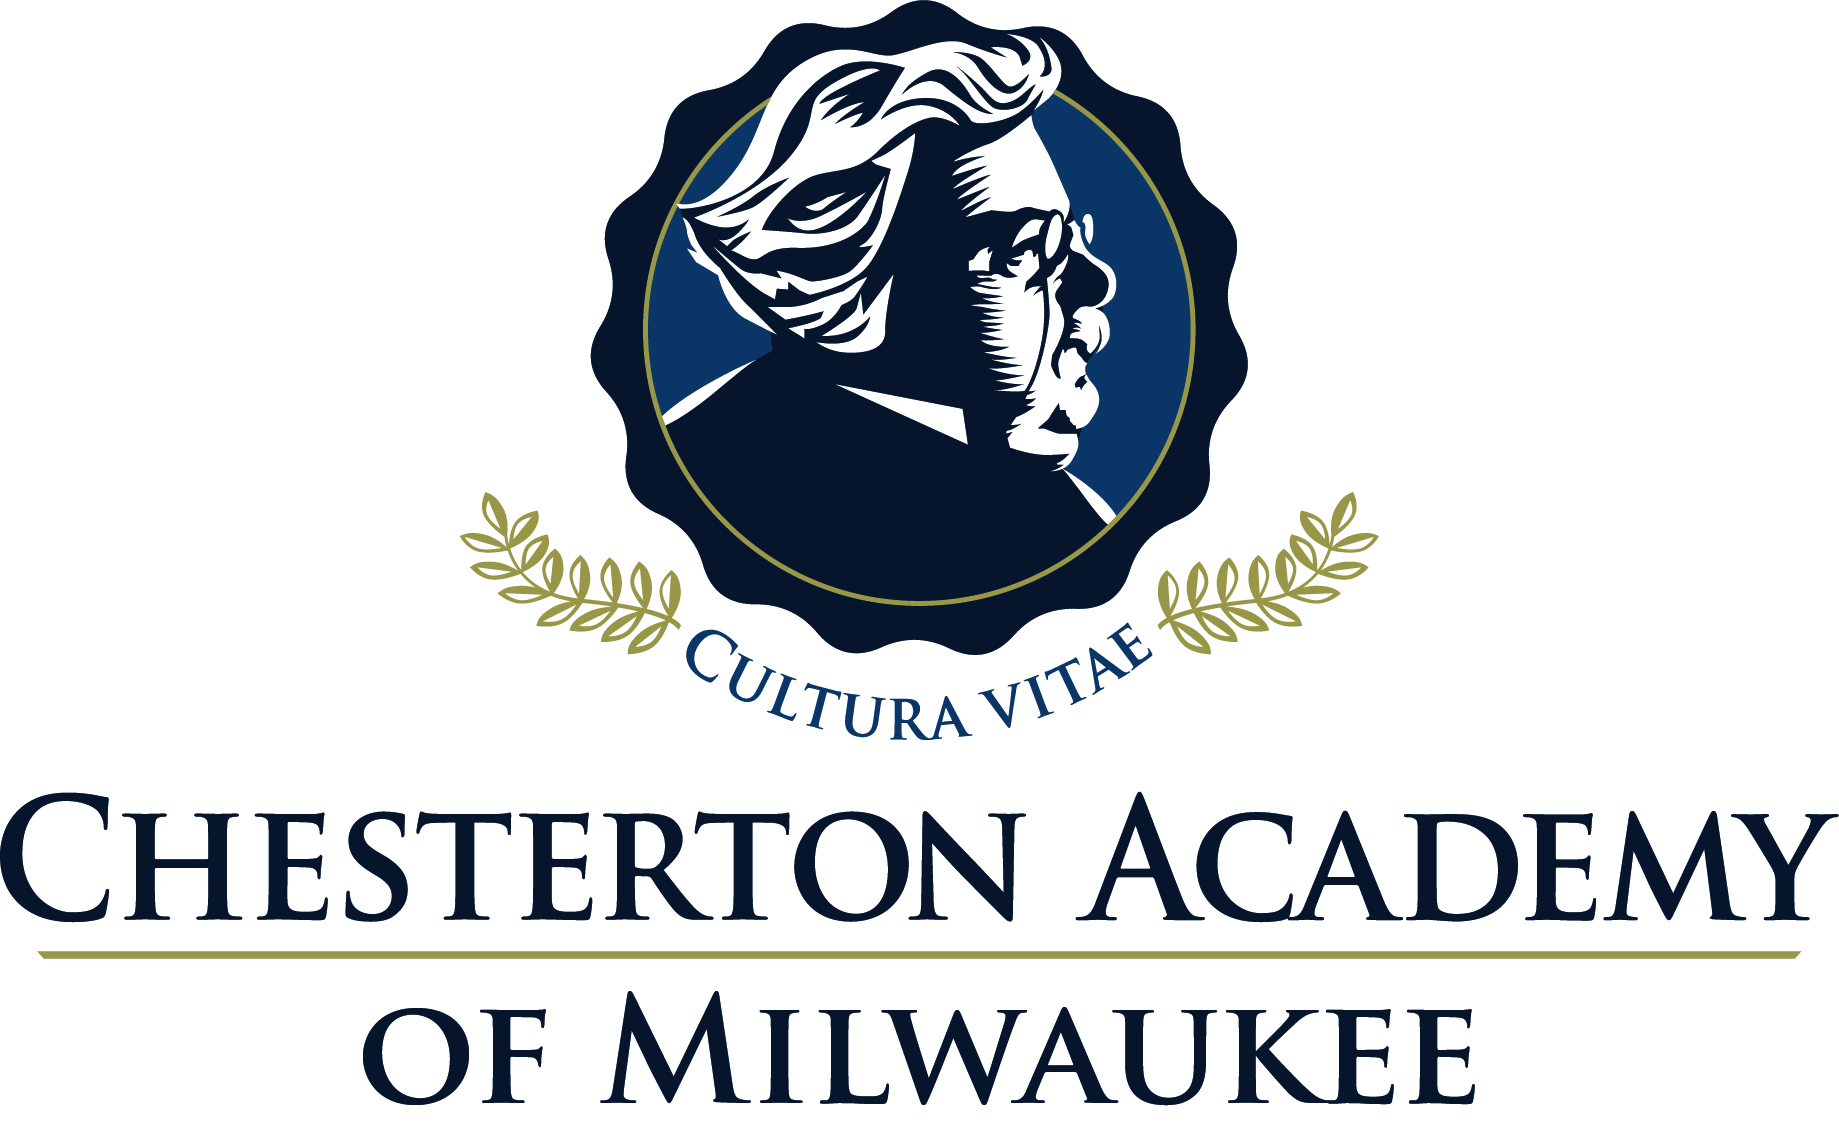 Chesterton Academy of Milwaukee